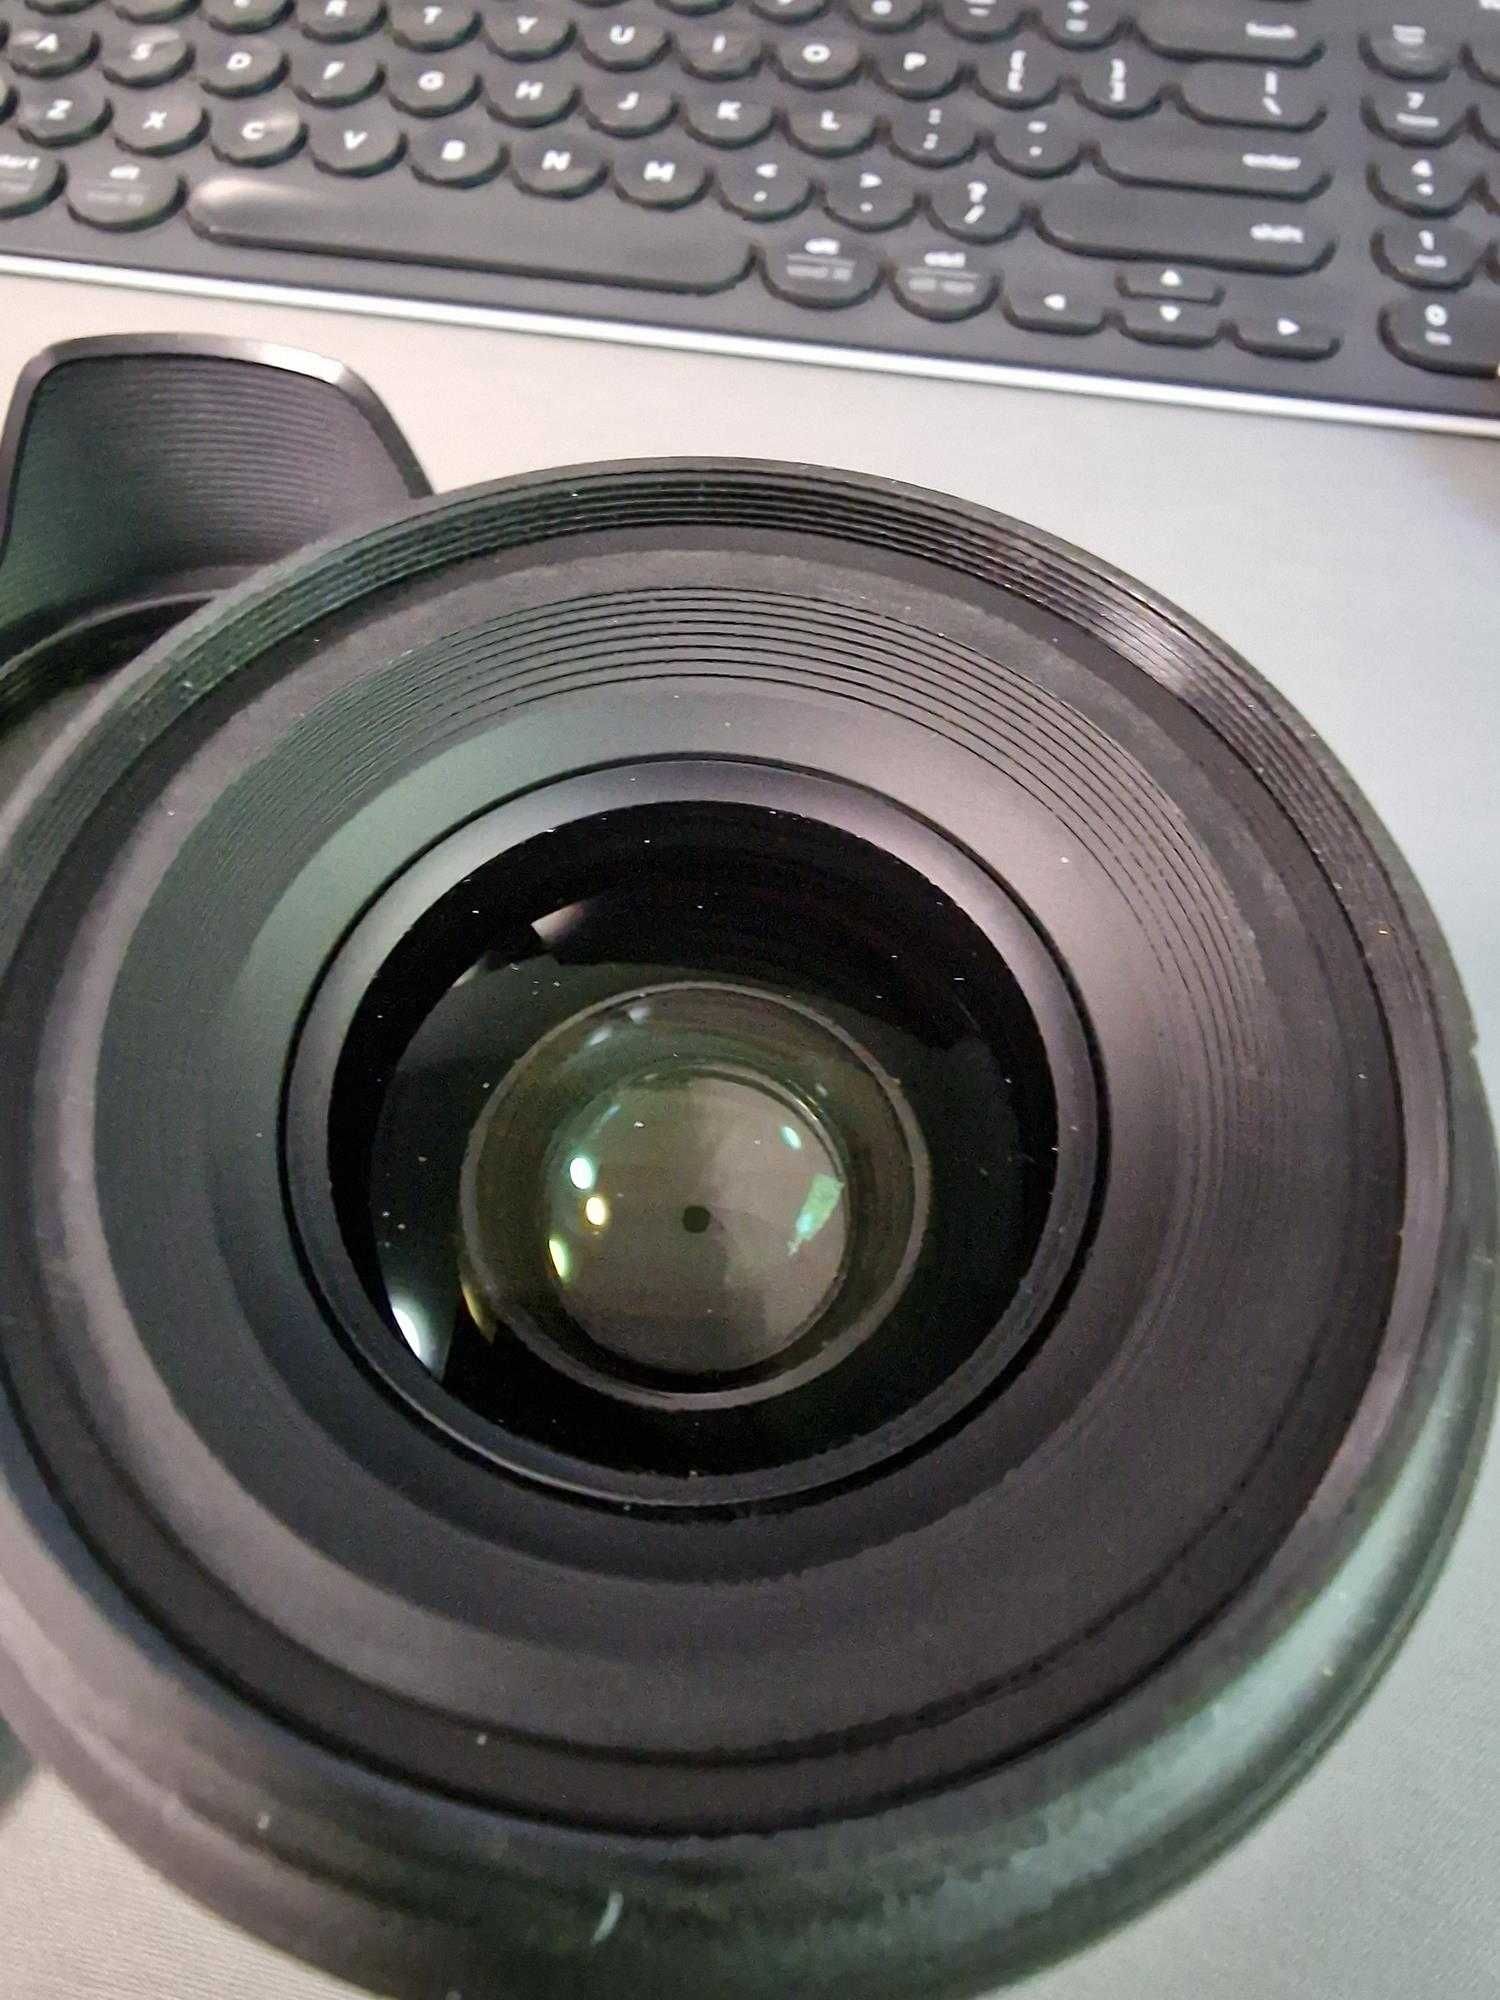 Tamron SP 35 mm F/1.8 Di VC USD pod Nikona, obniżka ceny, (FV 23%)